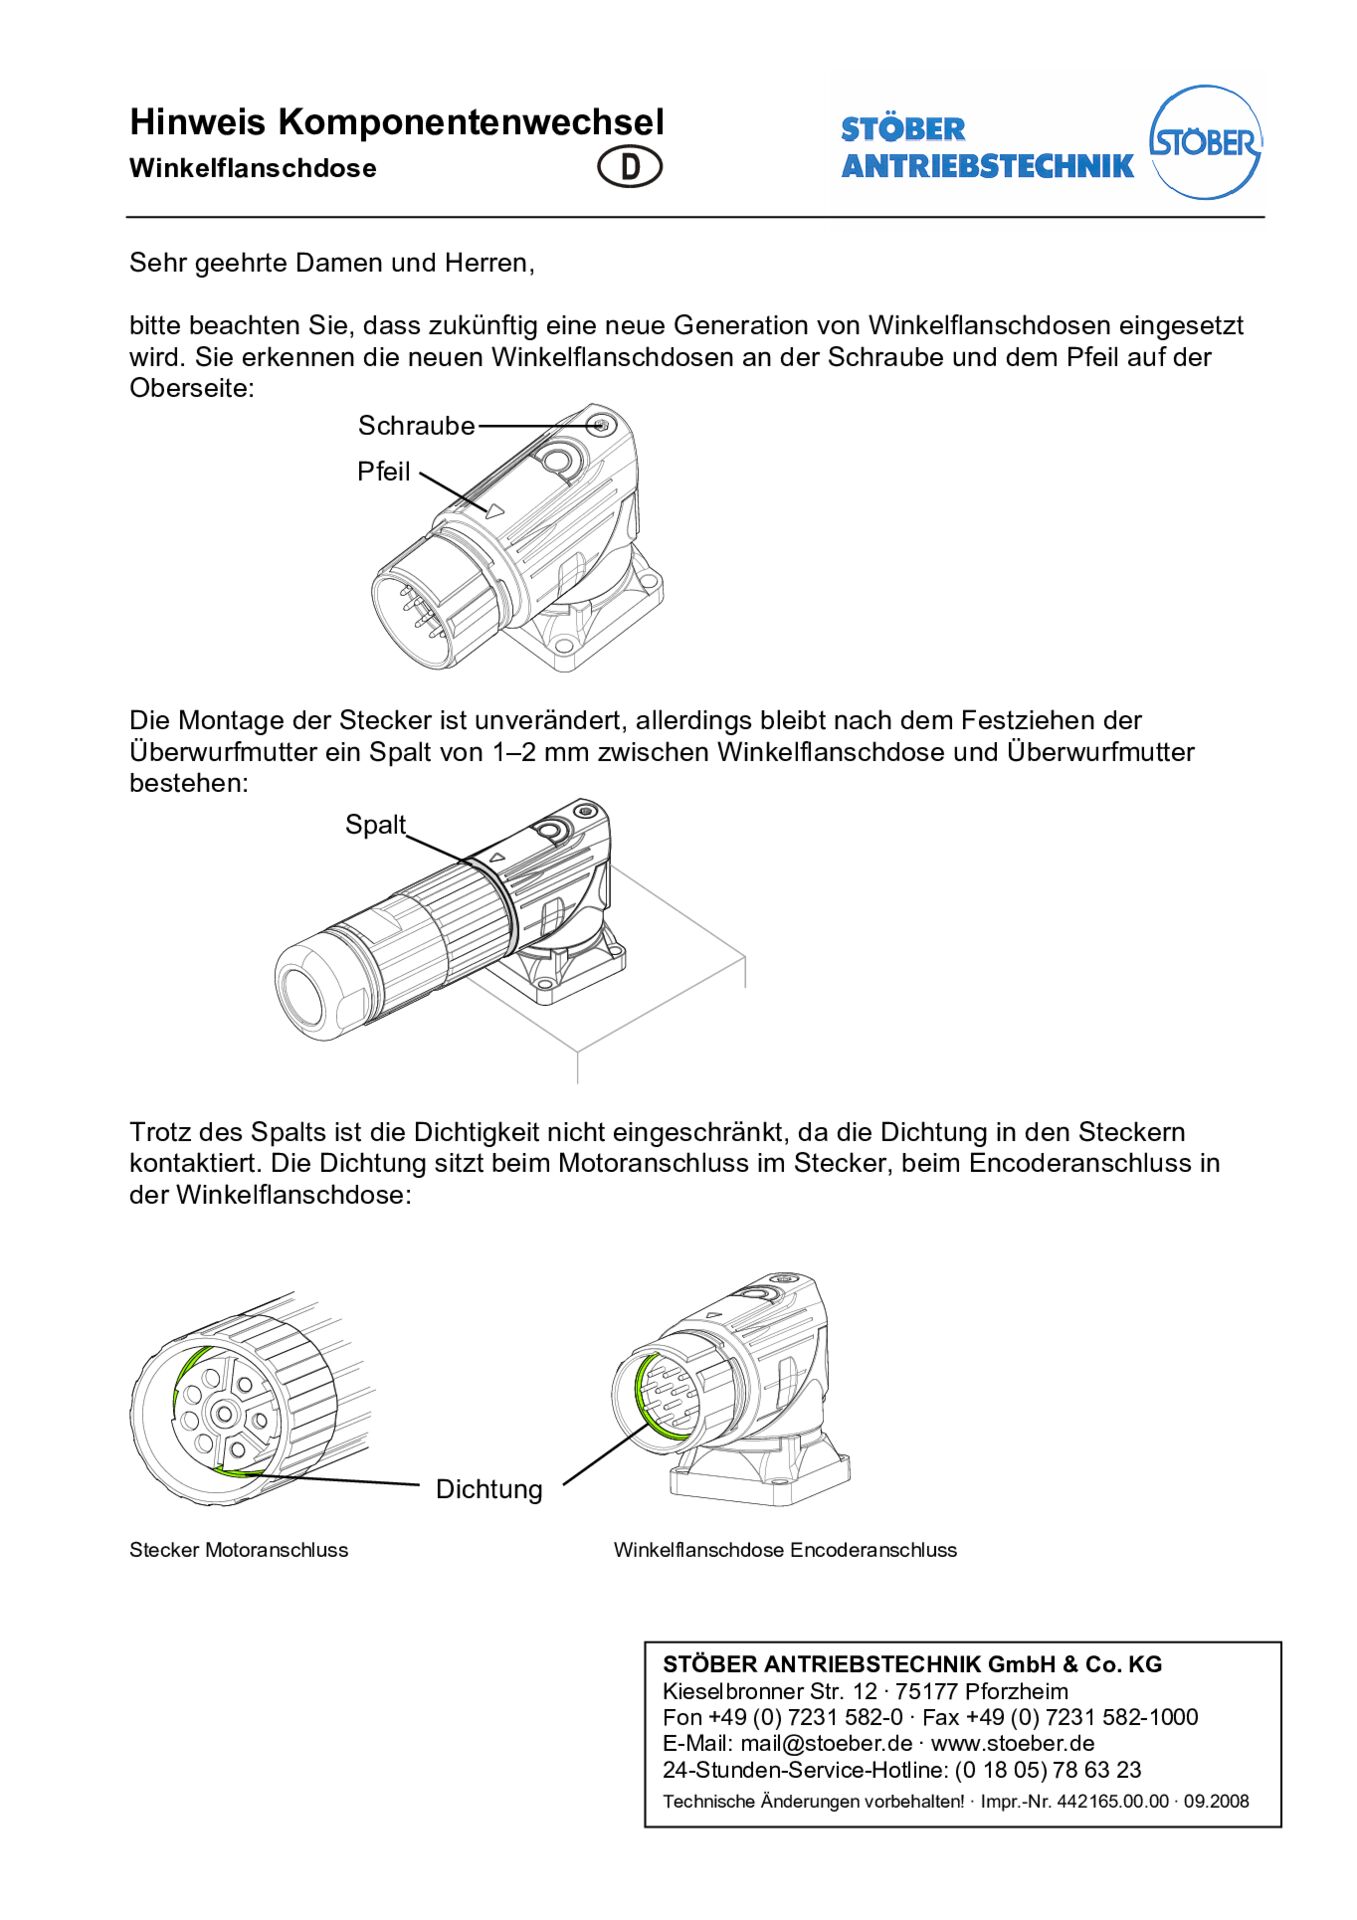 Instruction Change of components Right-angle flange socketHinweis Komponentenwechsel Winkelflanschdose